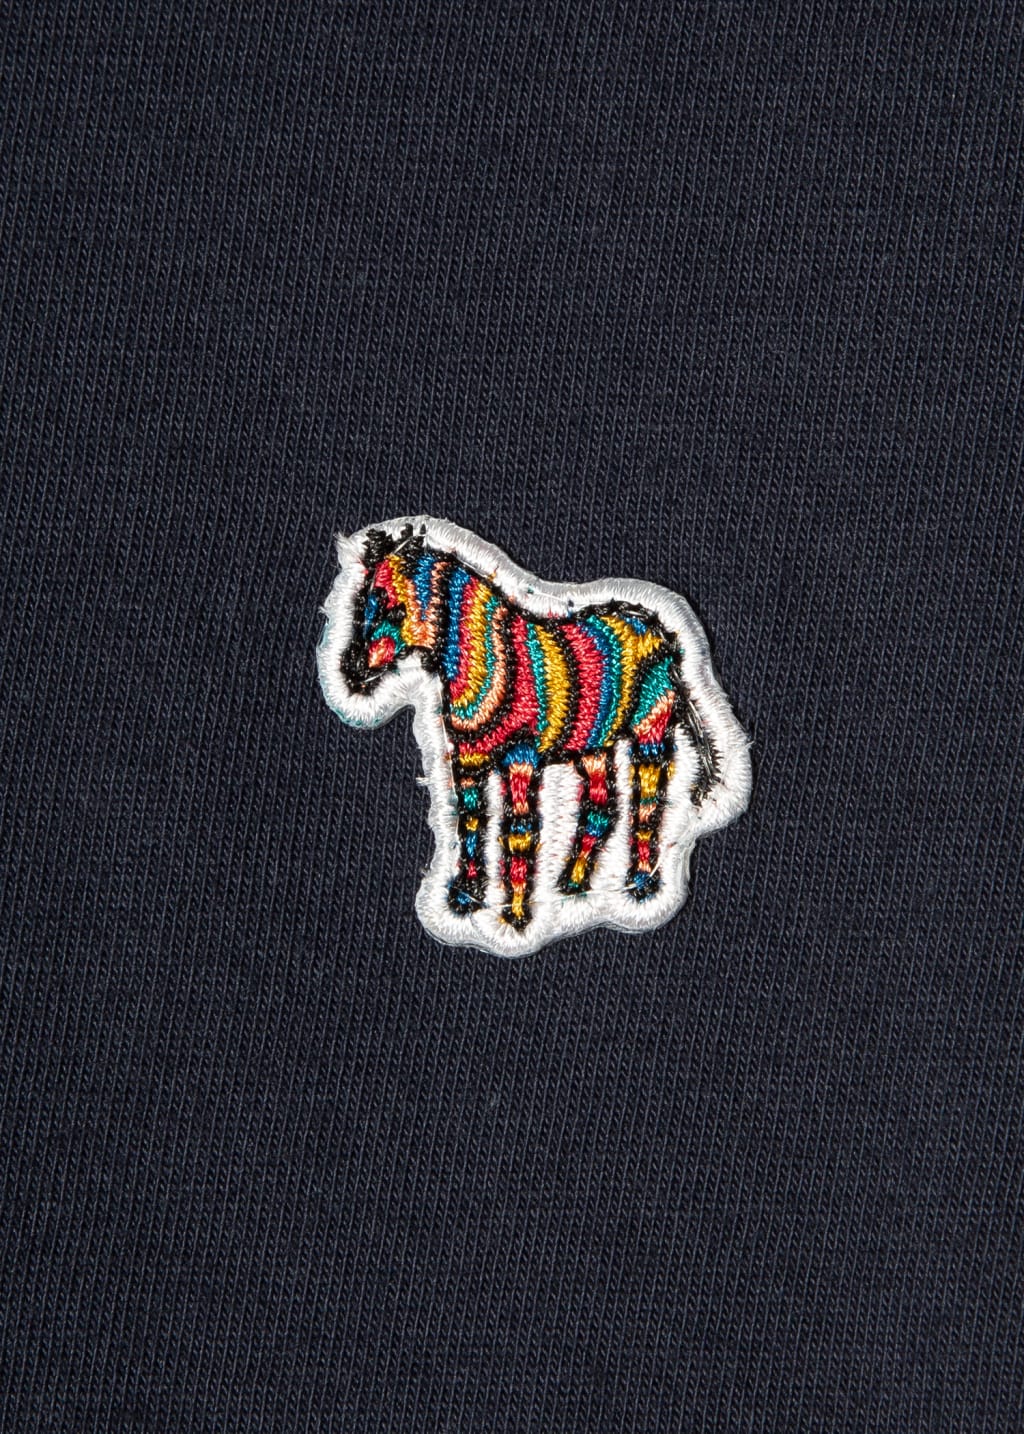 Detail View - Women's Navy Zebra Logo Cotton T-Shirt Paul Smith